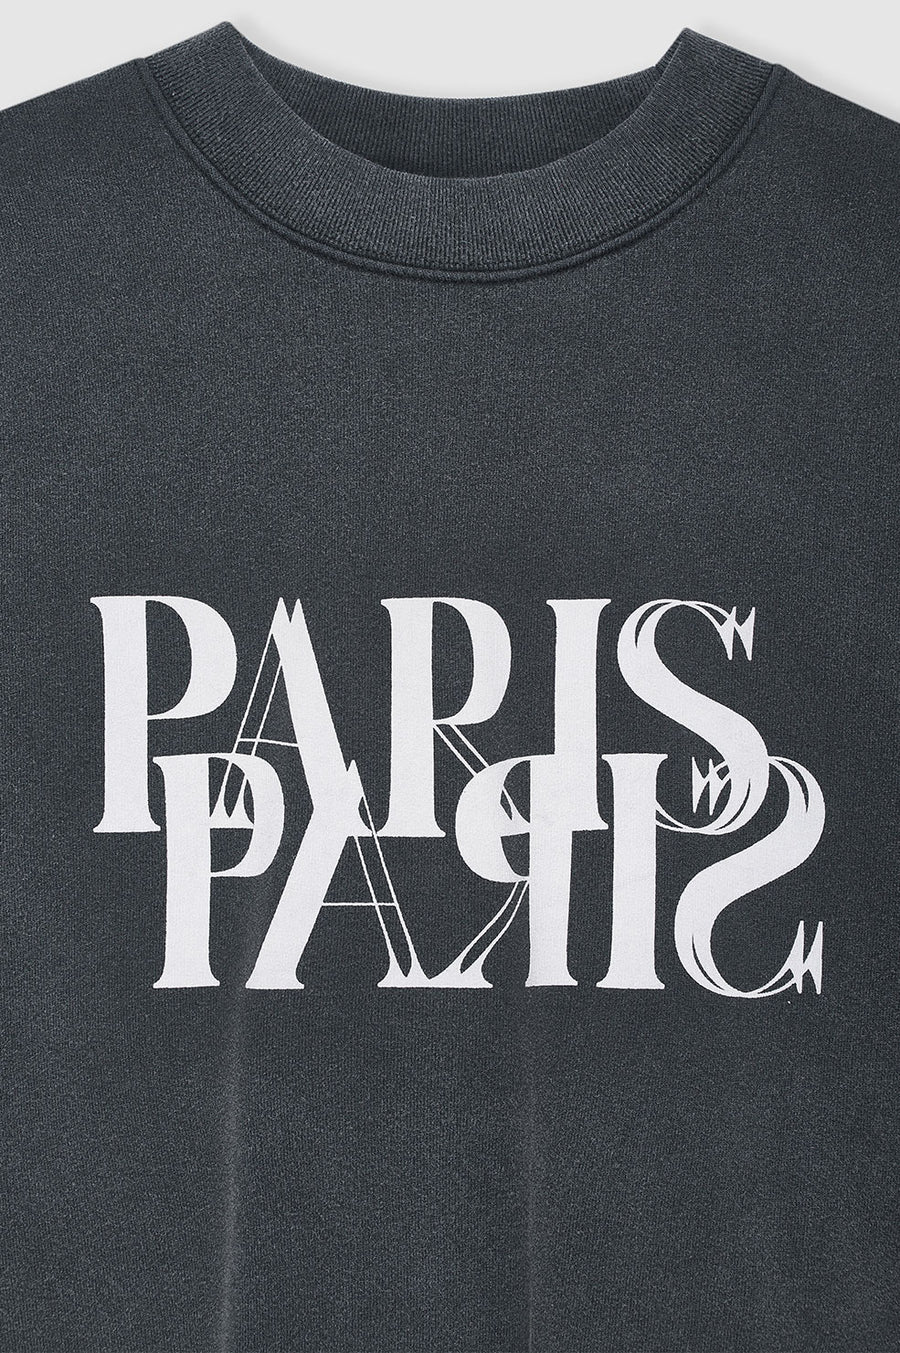 ANINE BING Jaci Paris Sweatshirt in Washed Black S